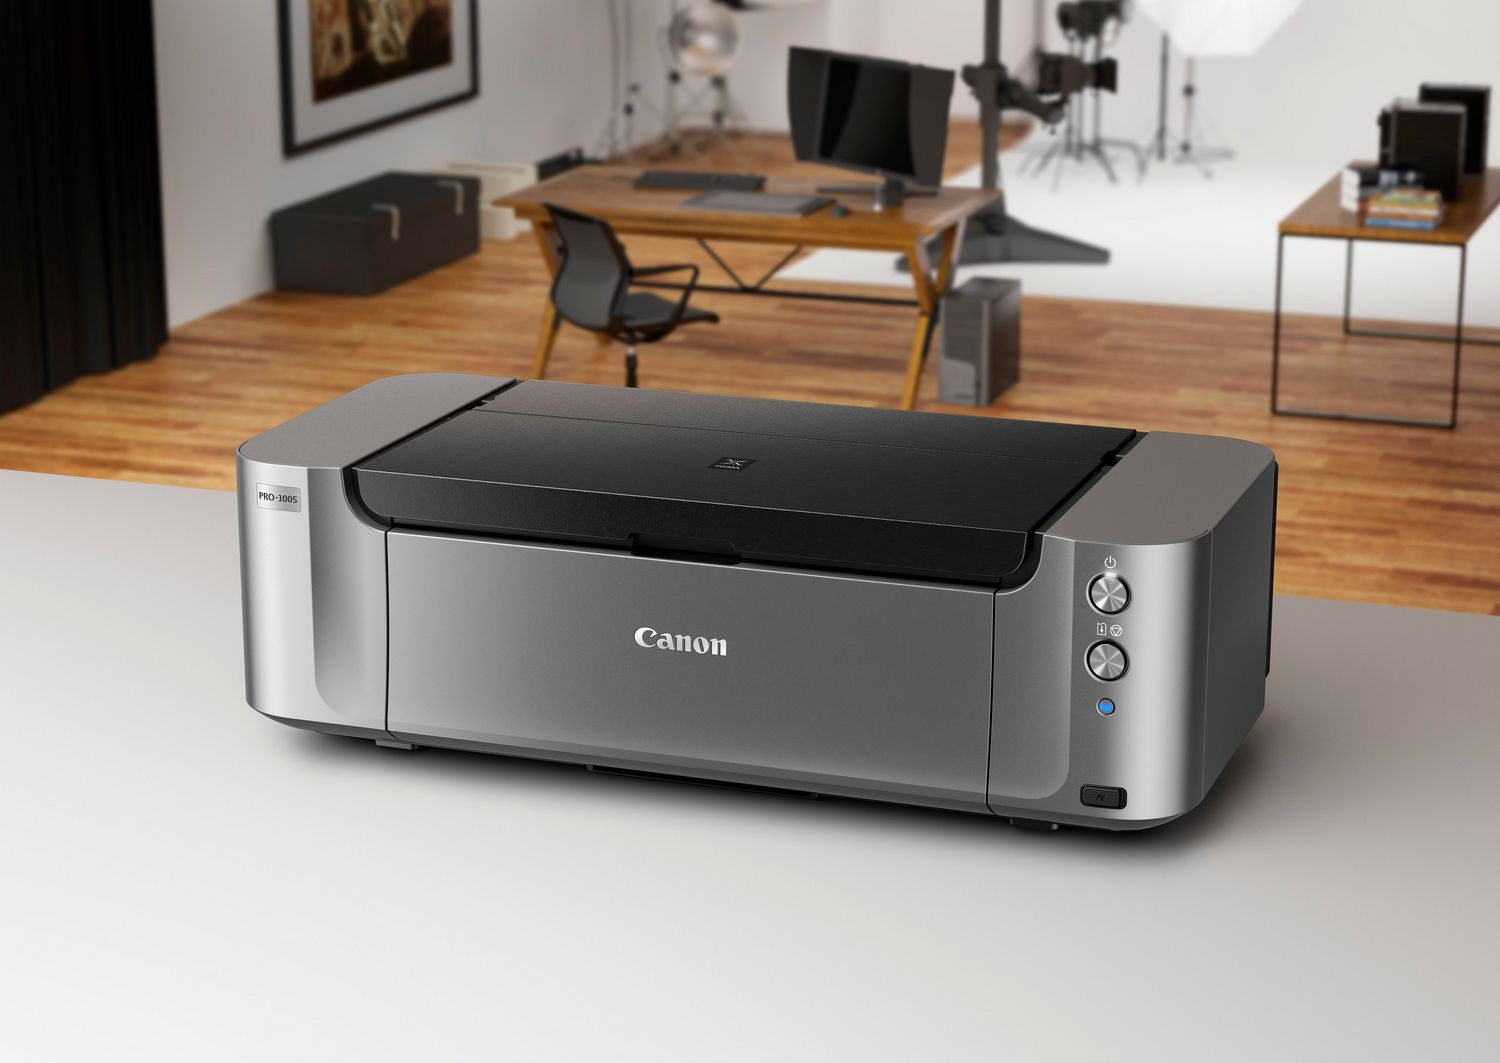 Canon Pixma Pro 100s Digital Photo Printer Wireless Inkjet A4 Silver 